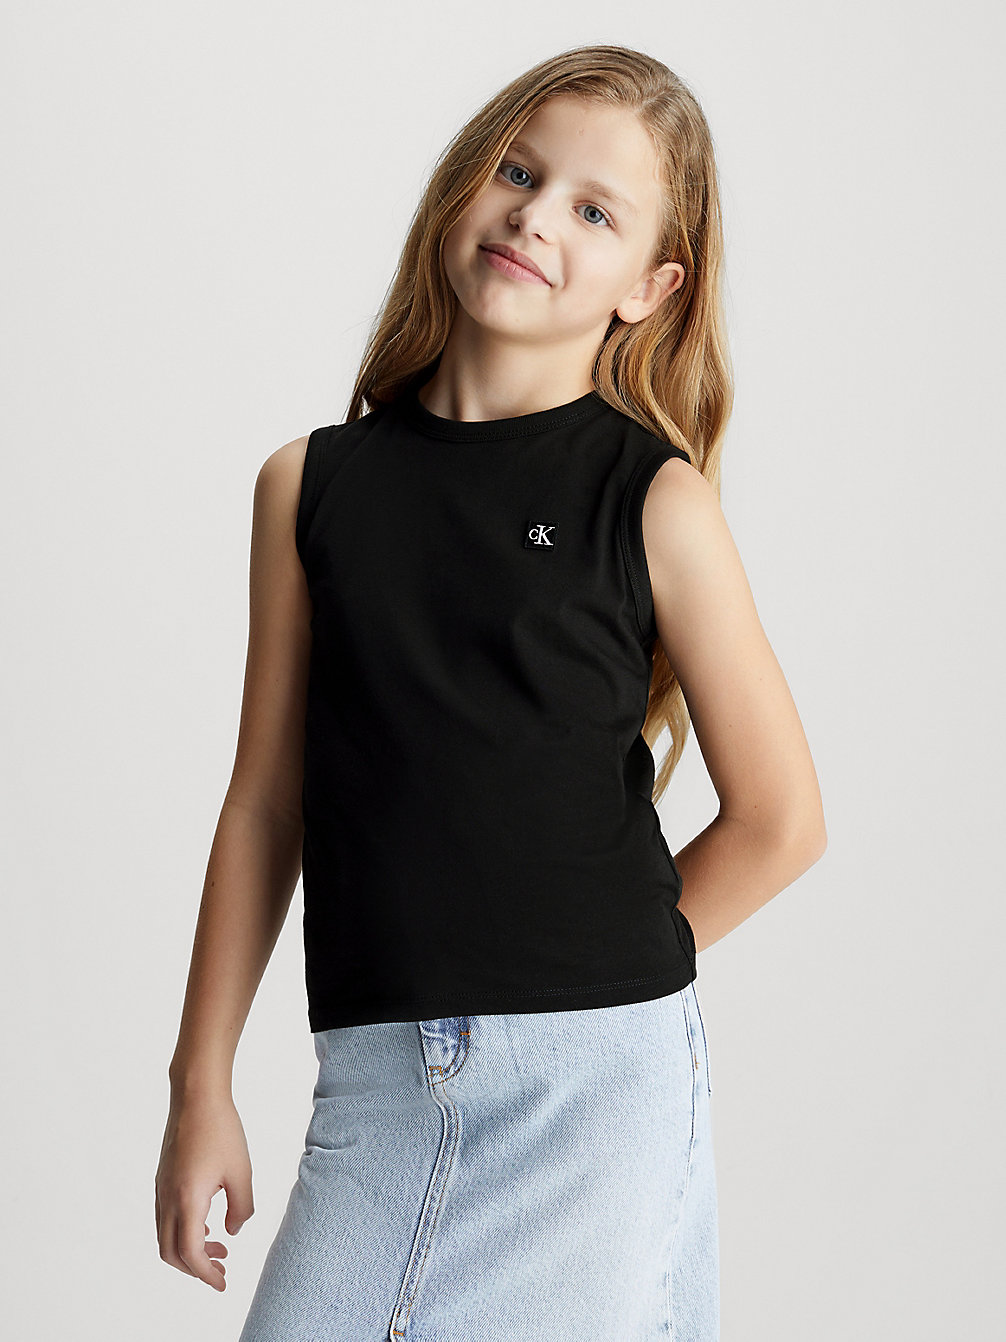 Camiseta De Tirantes Infantil Con Monograma > CK BLACK > undefined Unisex infantil > Calvin Klein